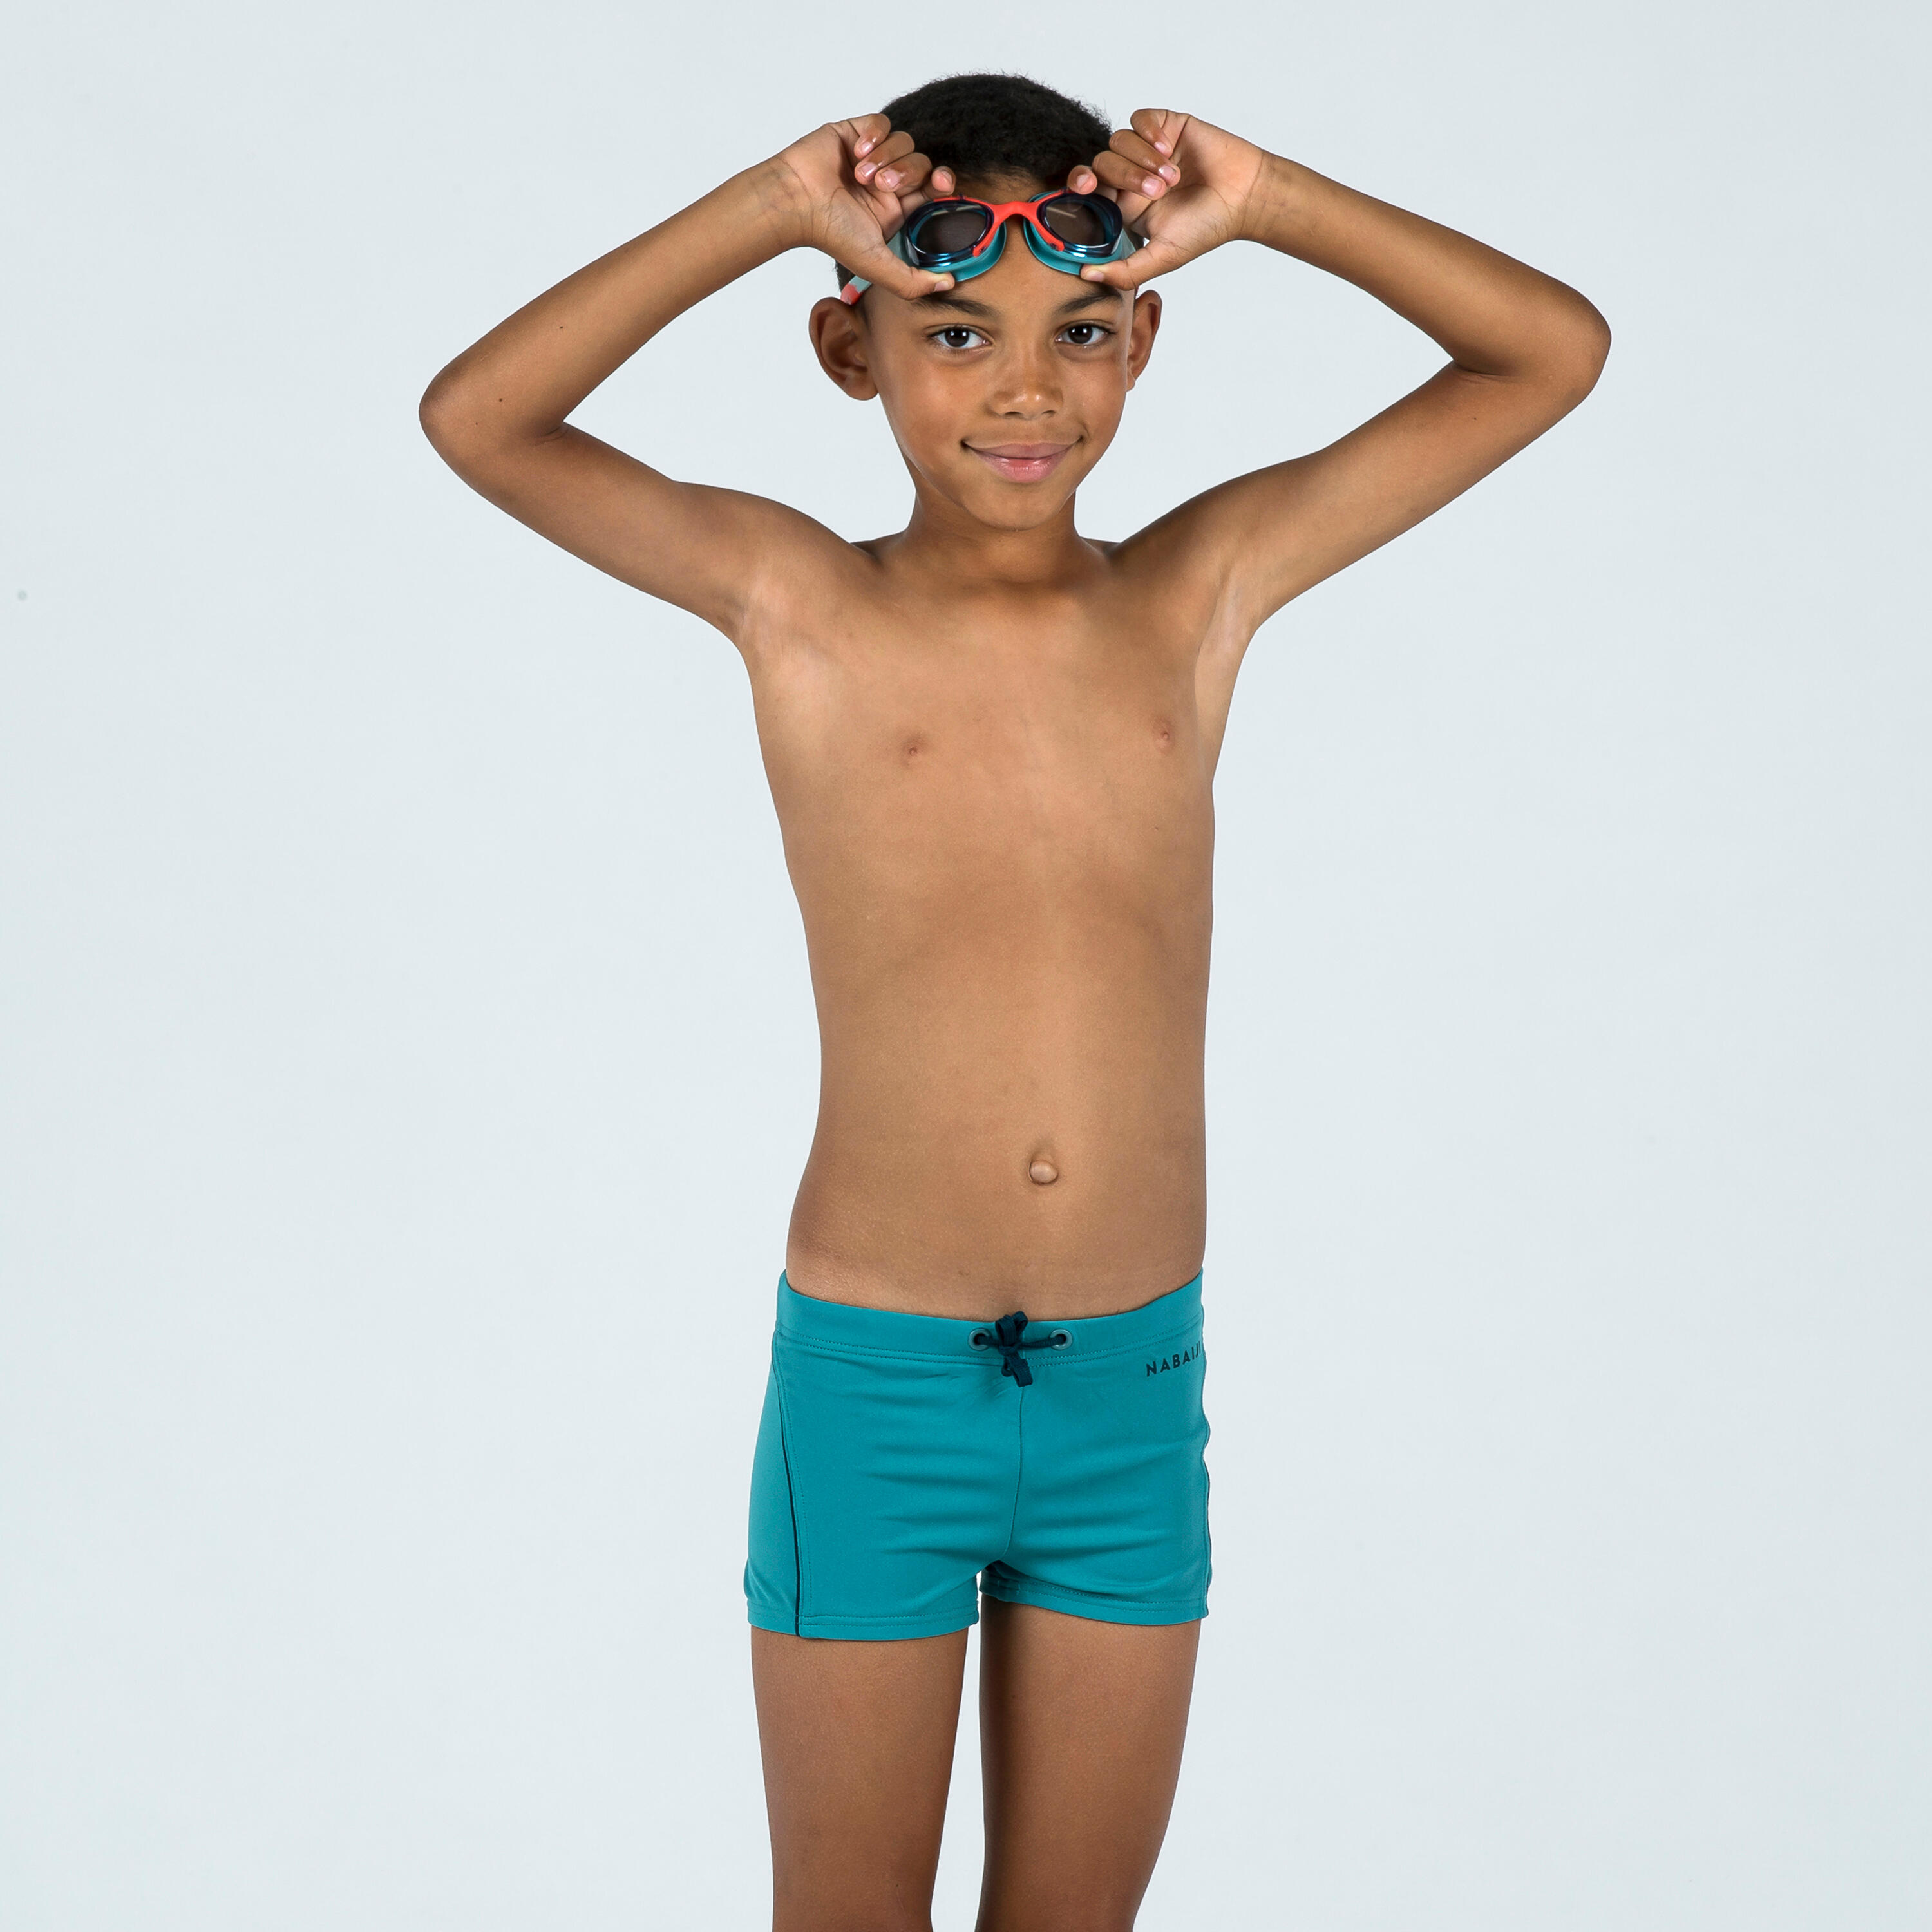 Swimming goggles XBASE - Clear lenses - Kids' size - Green orange 6/9